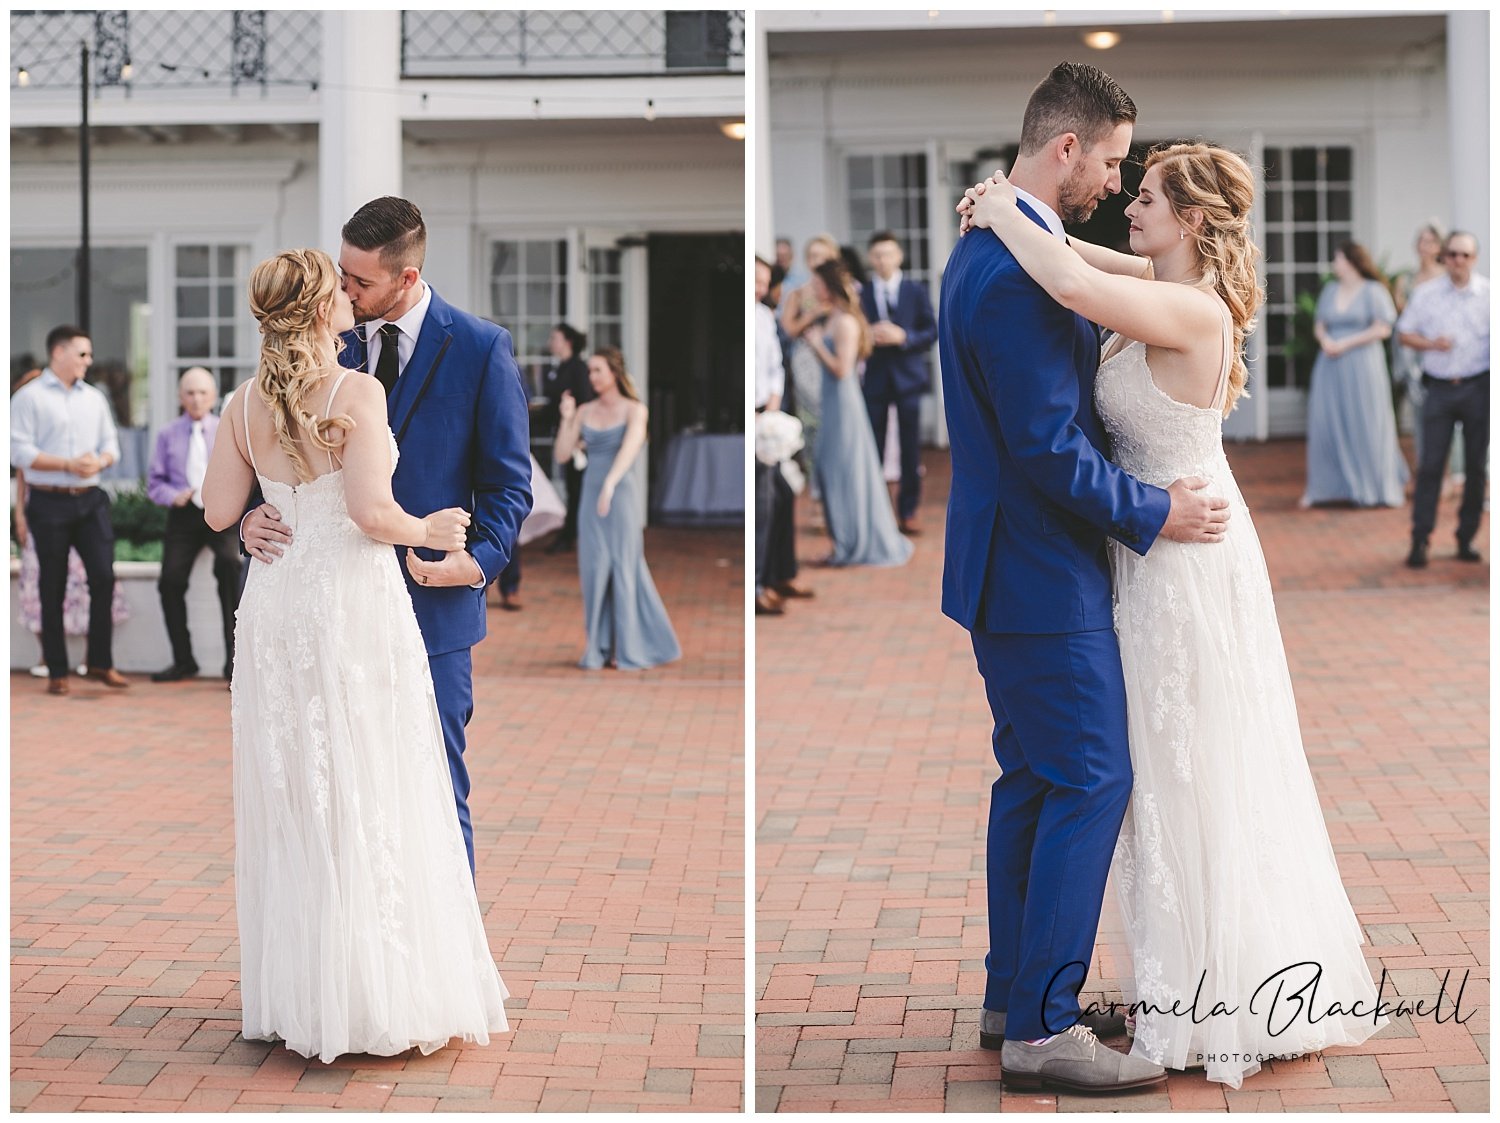 Weddings at Adams Estate Lake Alfred, FL- Carmela Blackwell Photography_0264.jpg